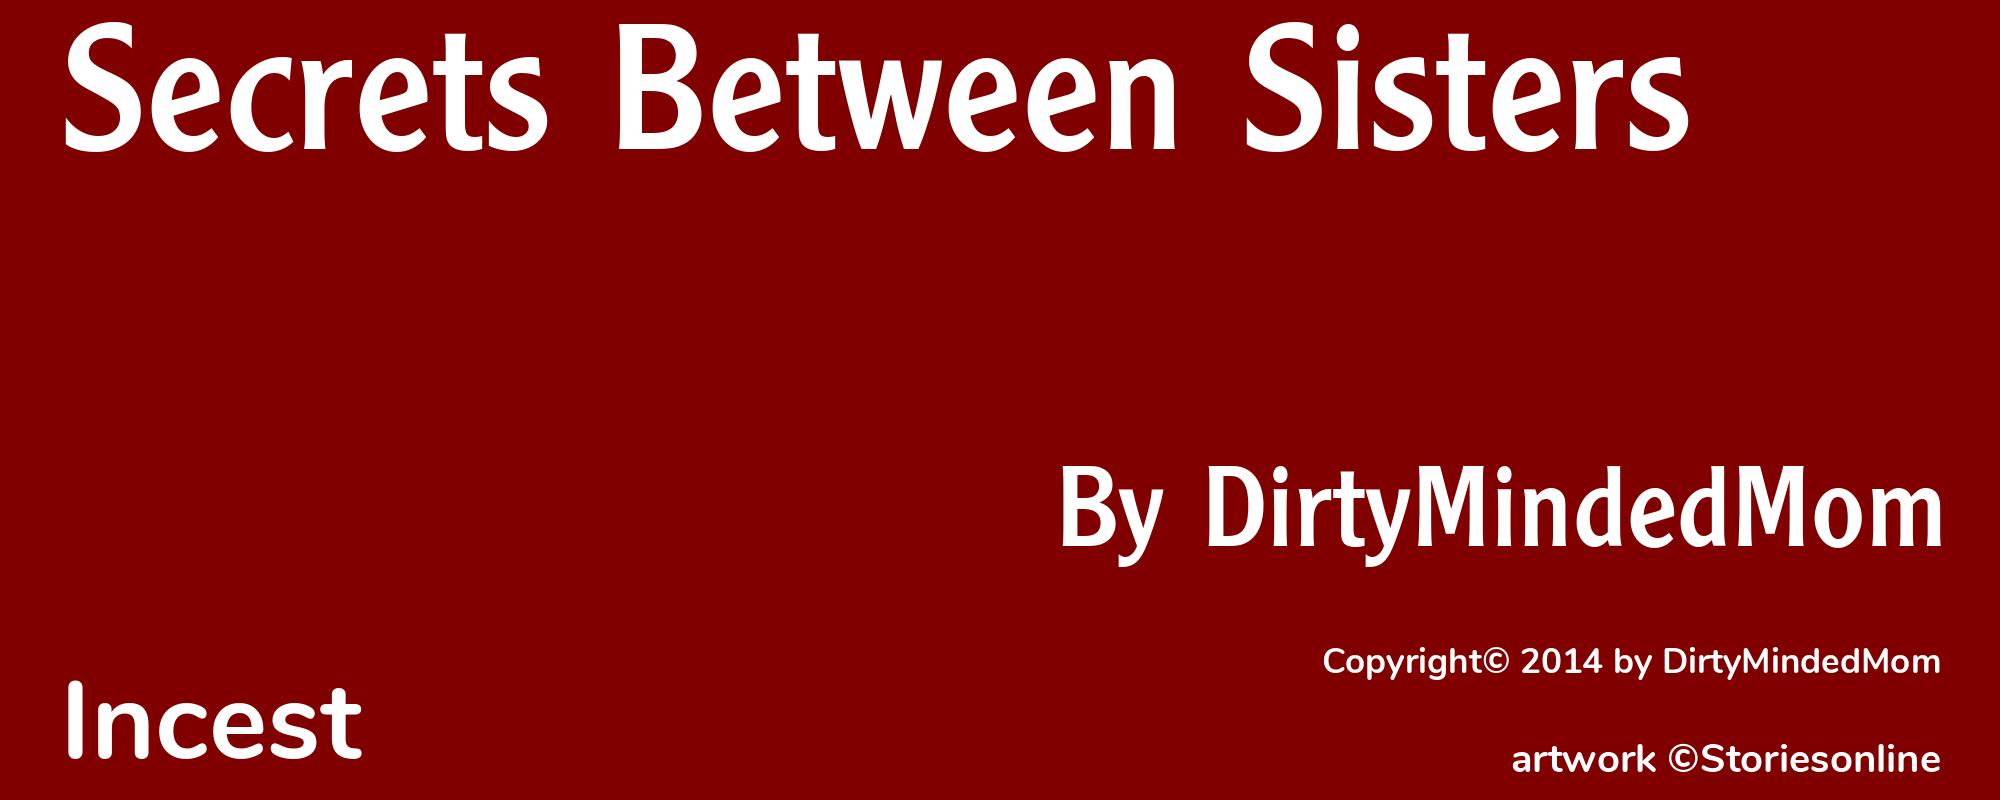 Secrets Between Sisters - Cover